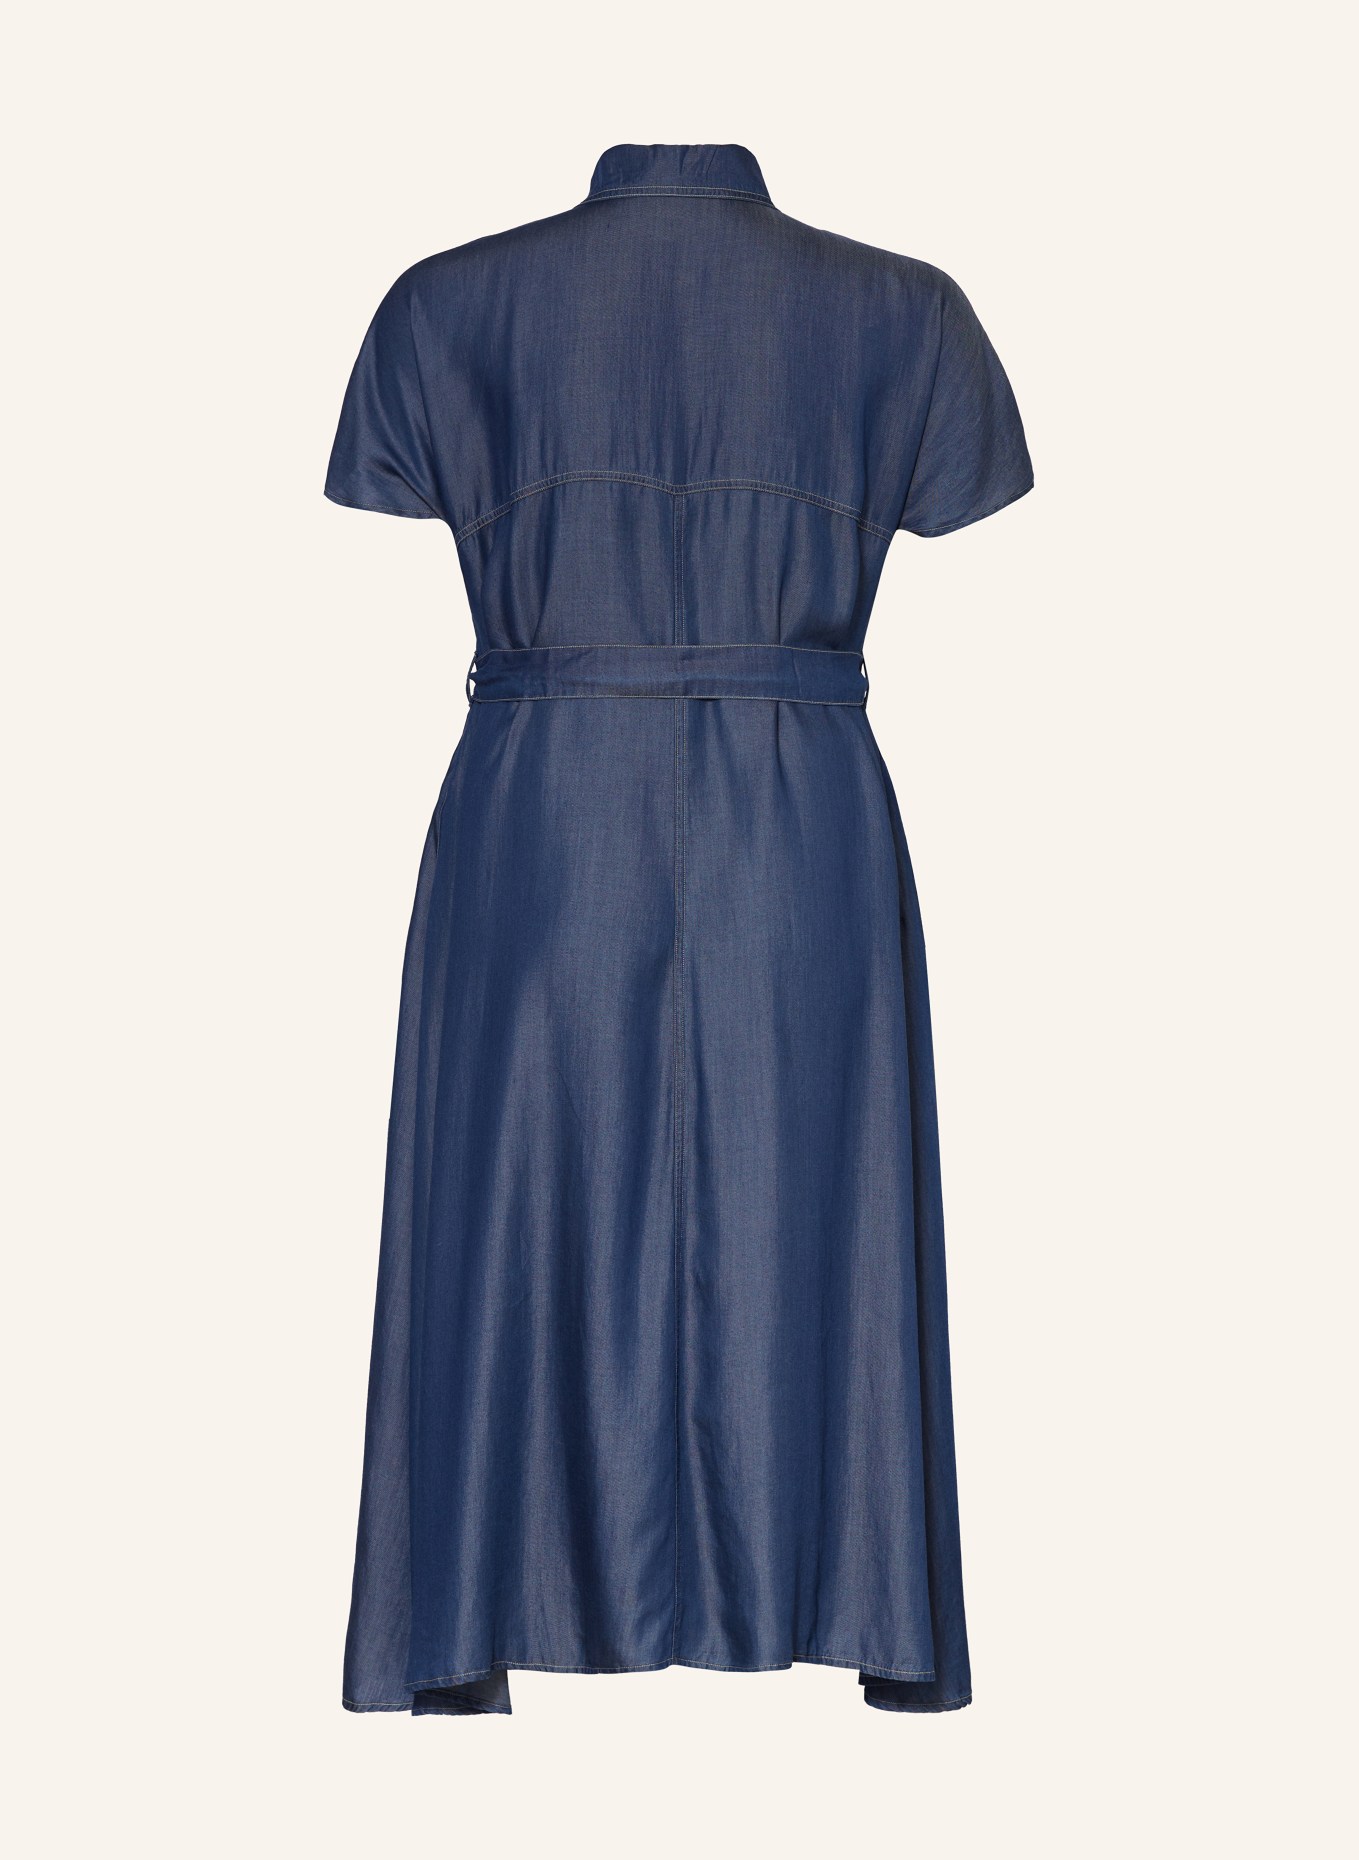 MARINA RINALDI PERSONA Hemdblusenkleid in Jeansoptik, Farbe: BLAU (Bild 2)